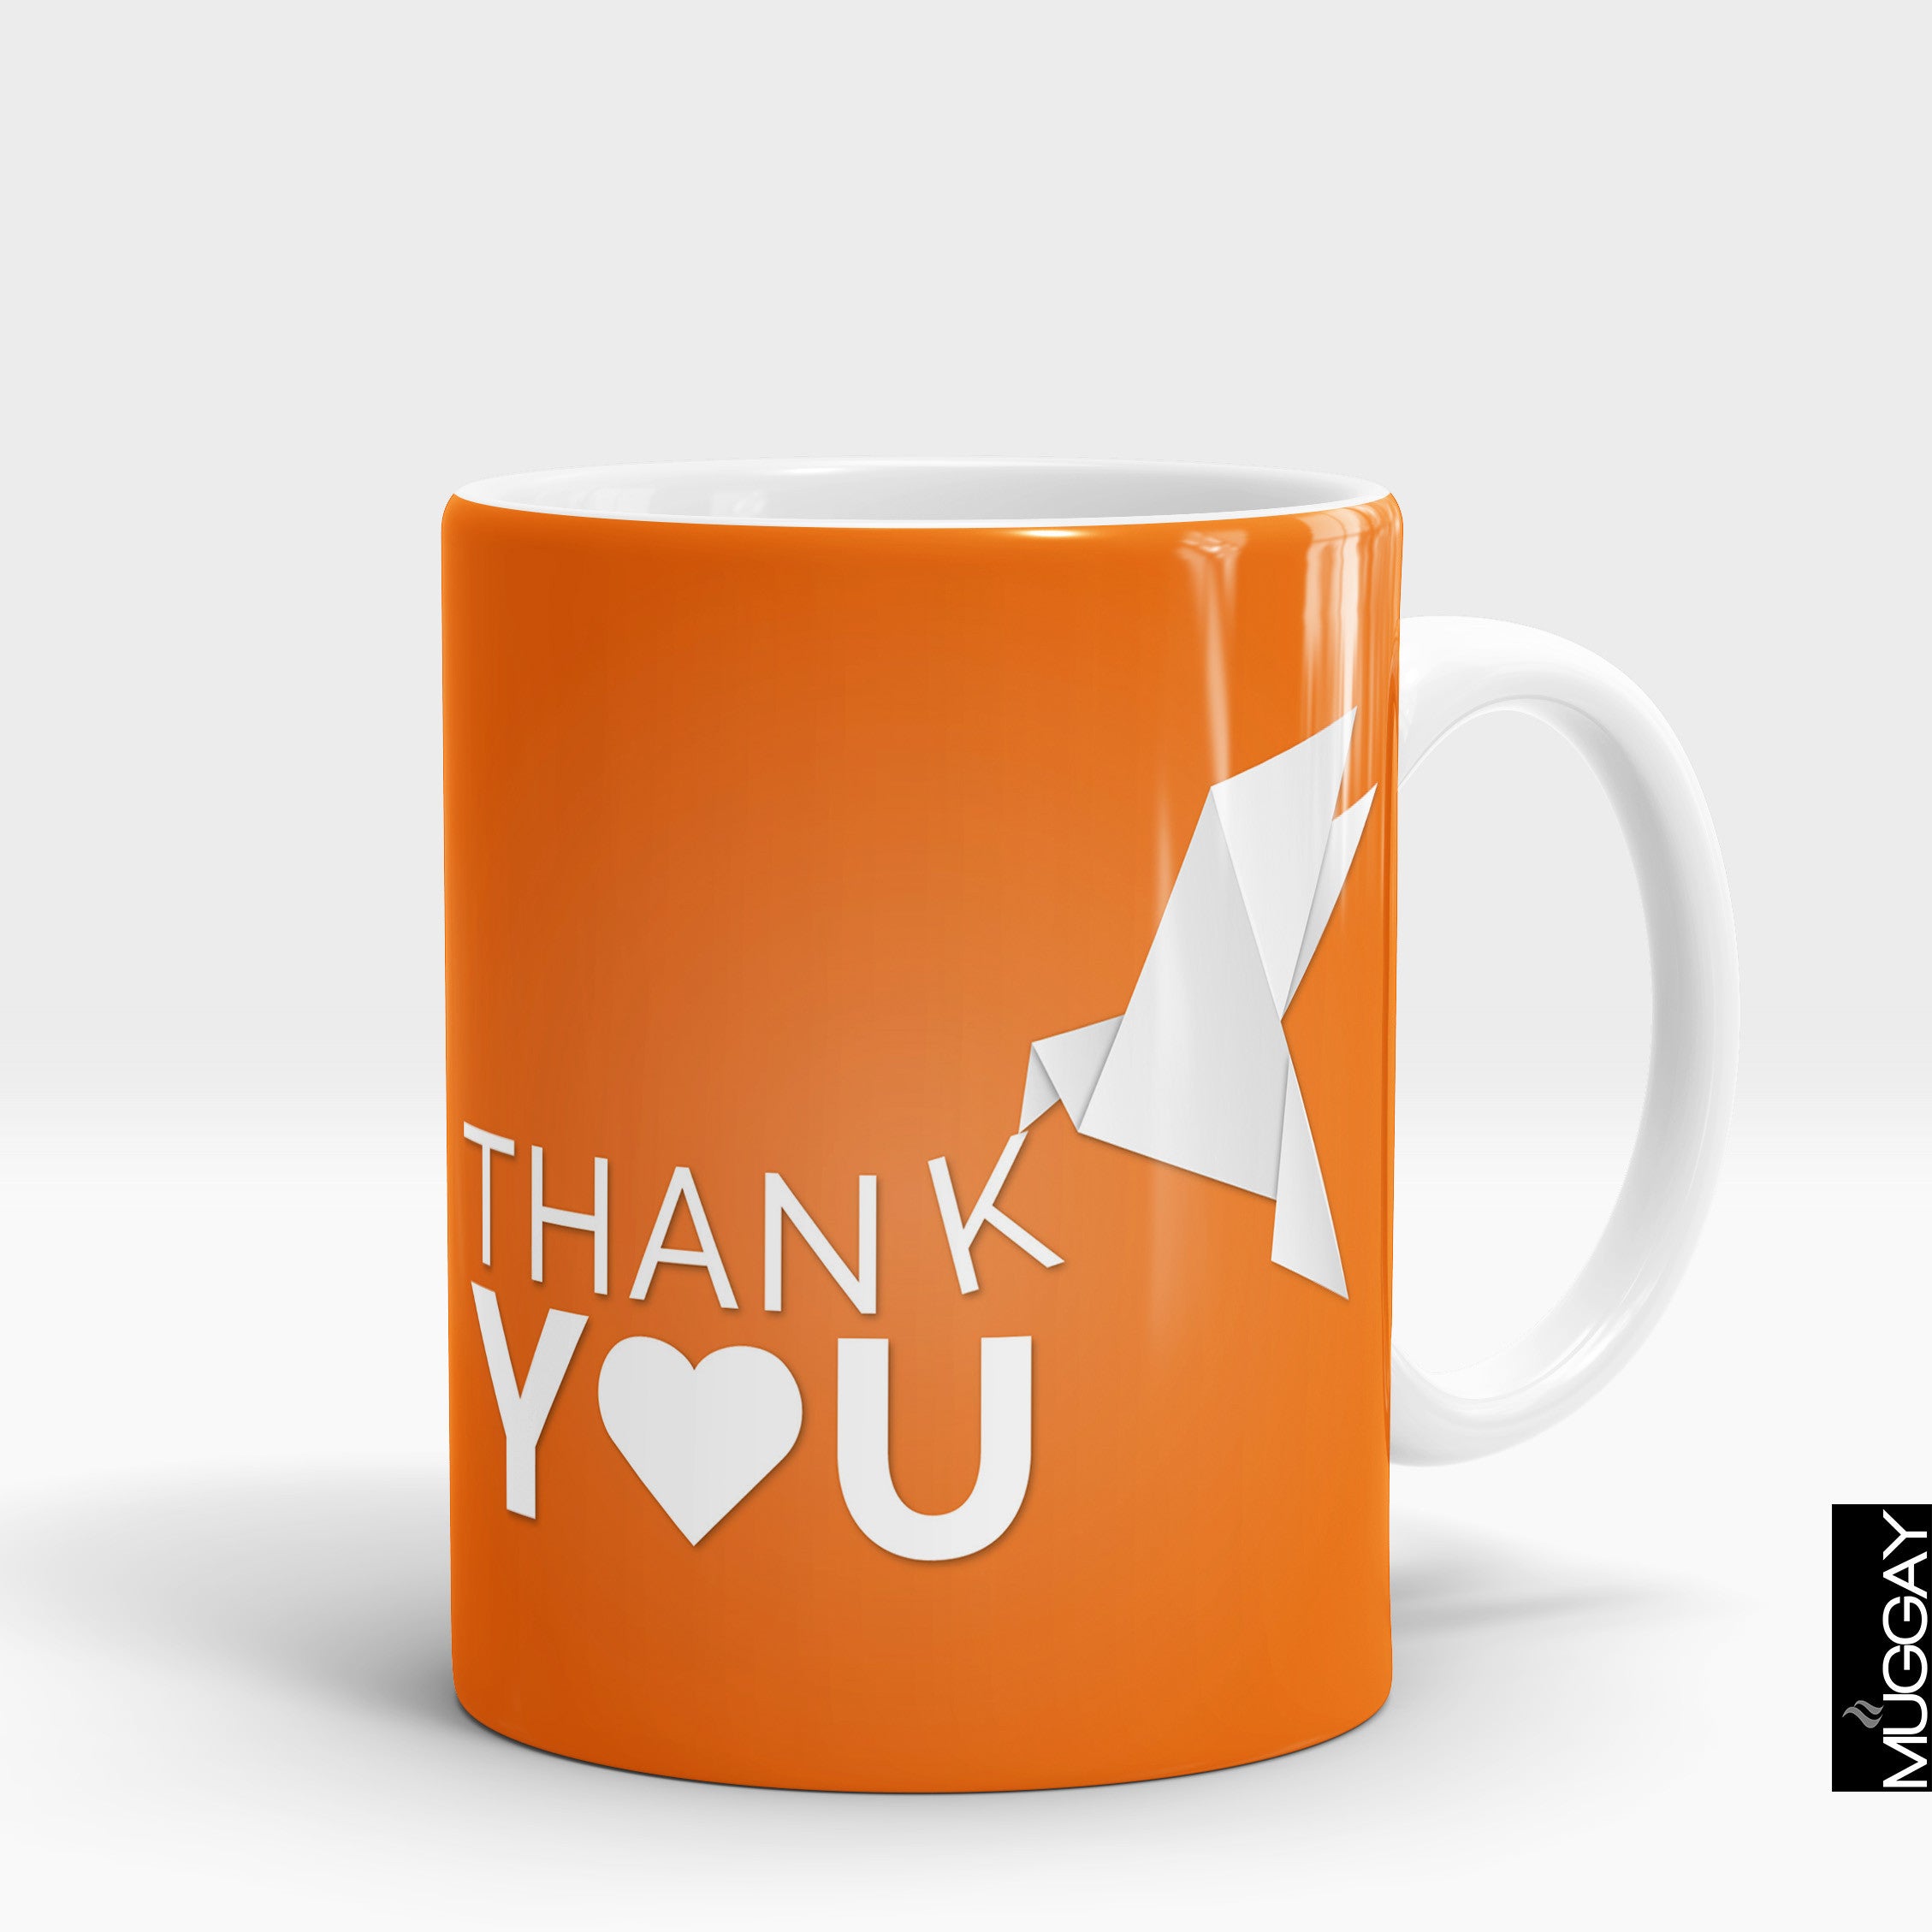 Thankyou mugs6